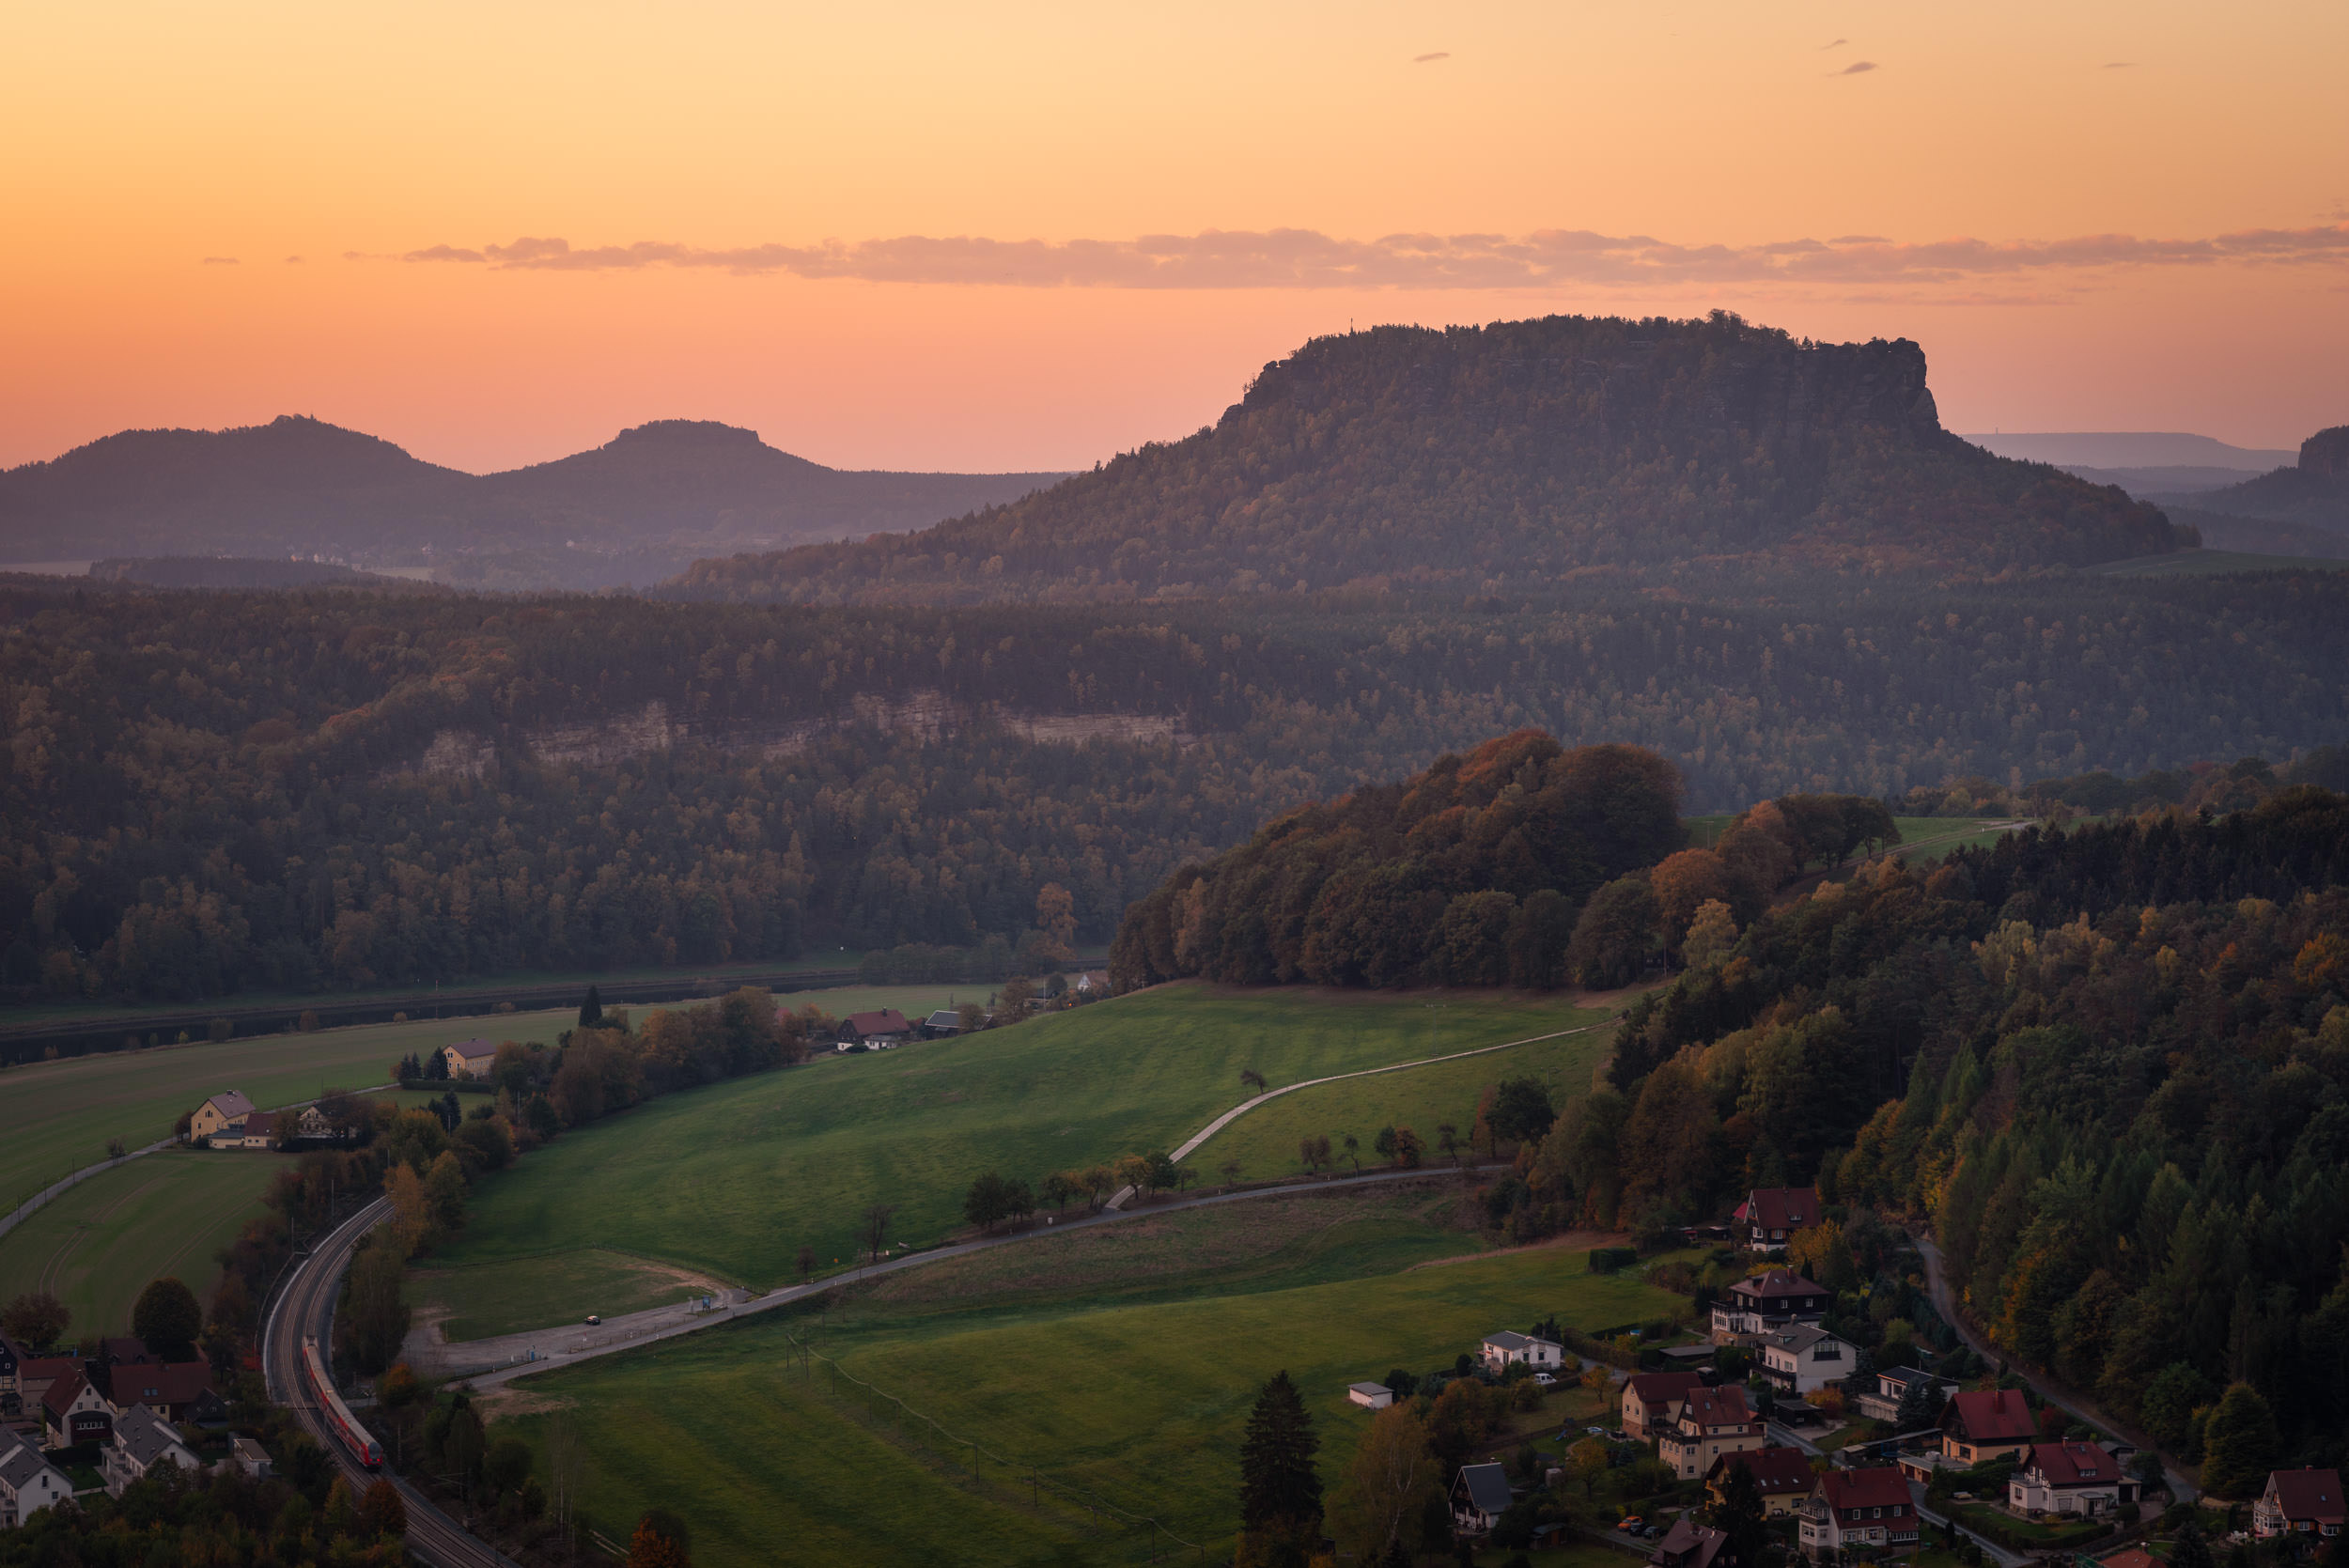 Sunrise over Rathen - Landscape Photography in Saxon Switzerland during Autumn 